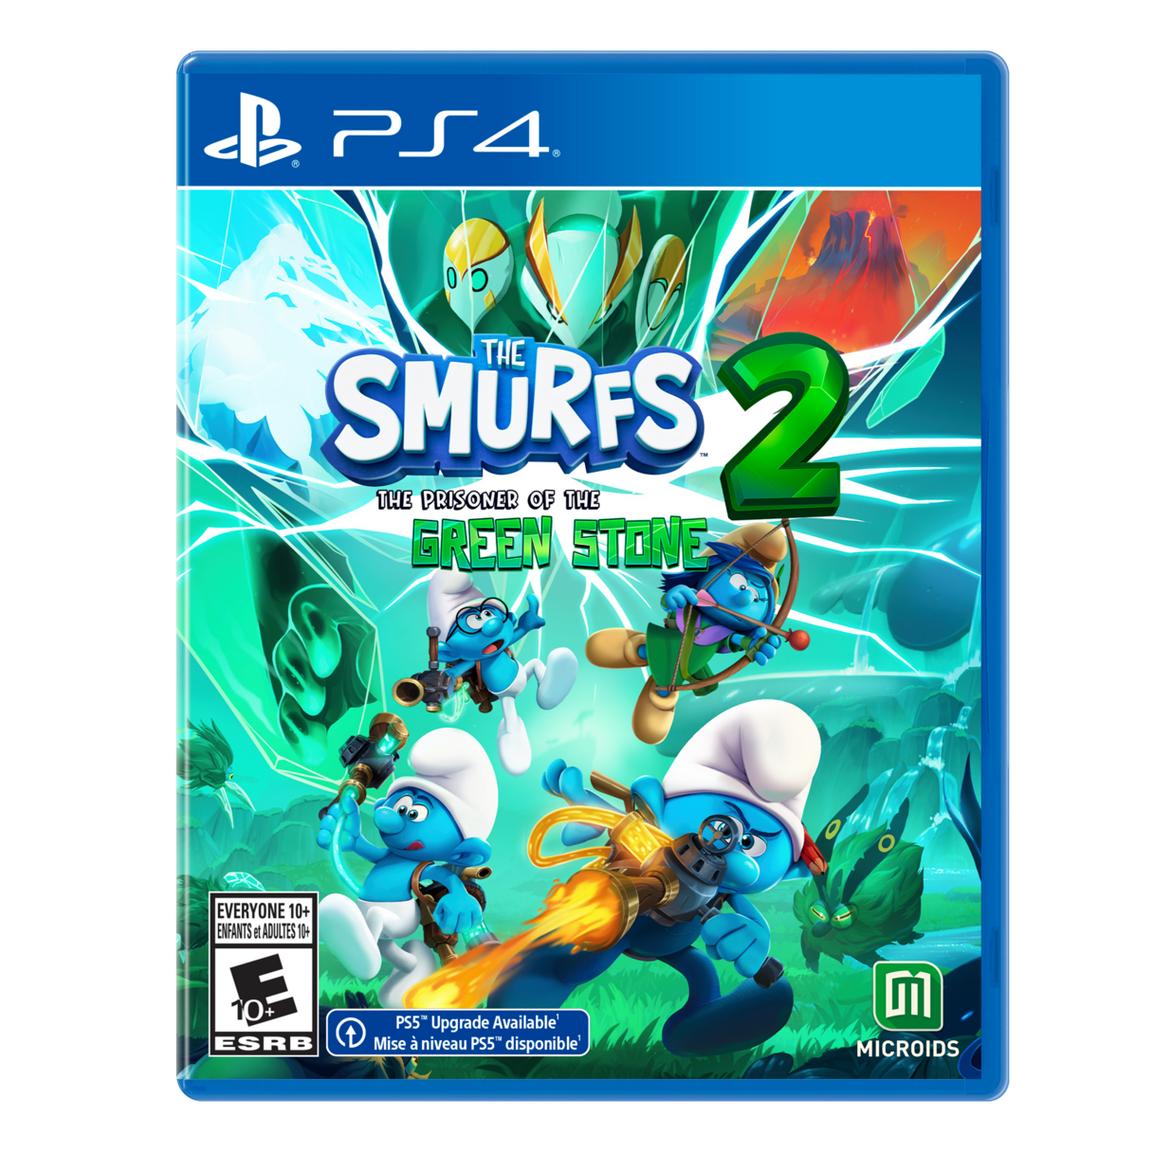 Видеоигра The Smurfs 2: Prisoner of the Green Stone - PlayStation 4 ps4 игра microids alfred hitchcock vertigo лимит изд